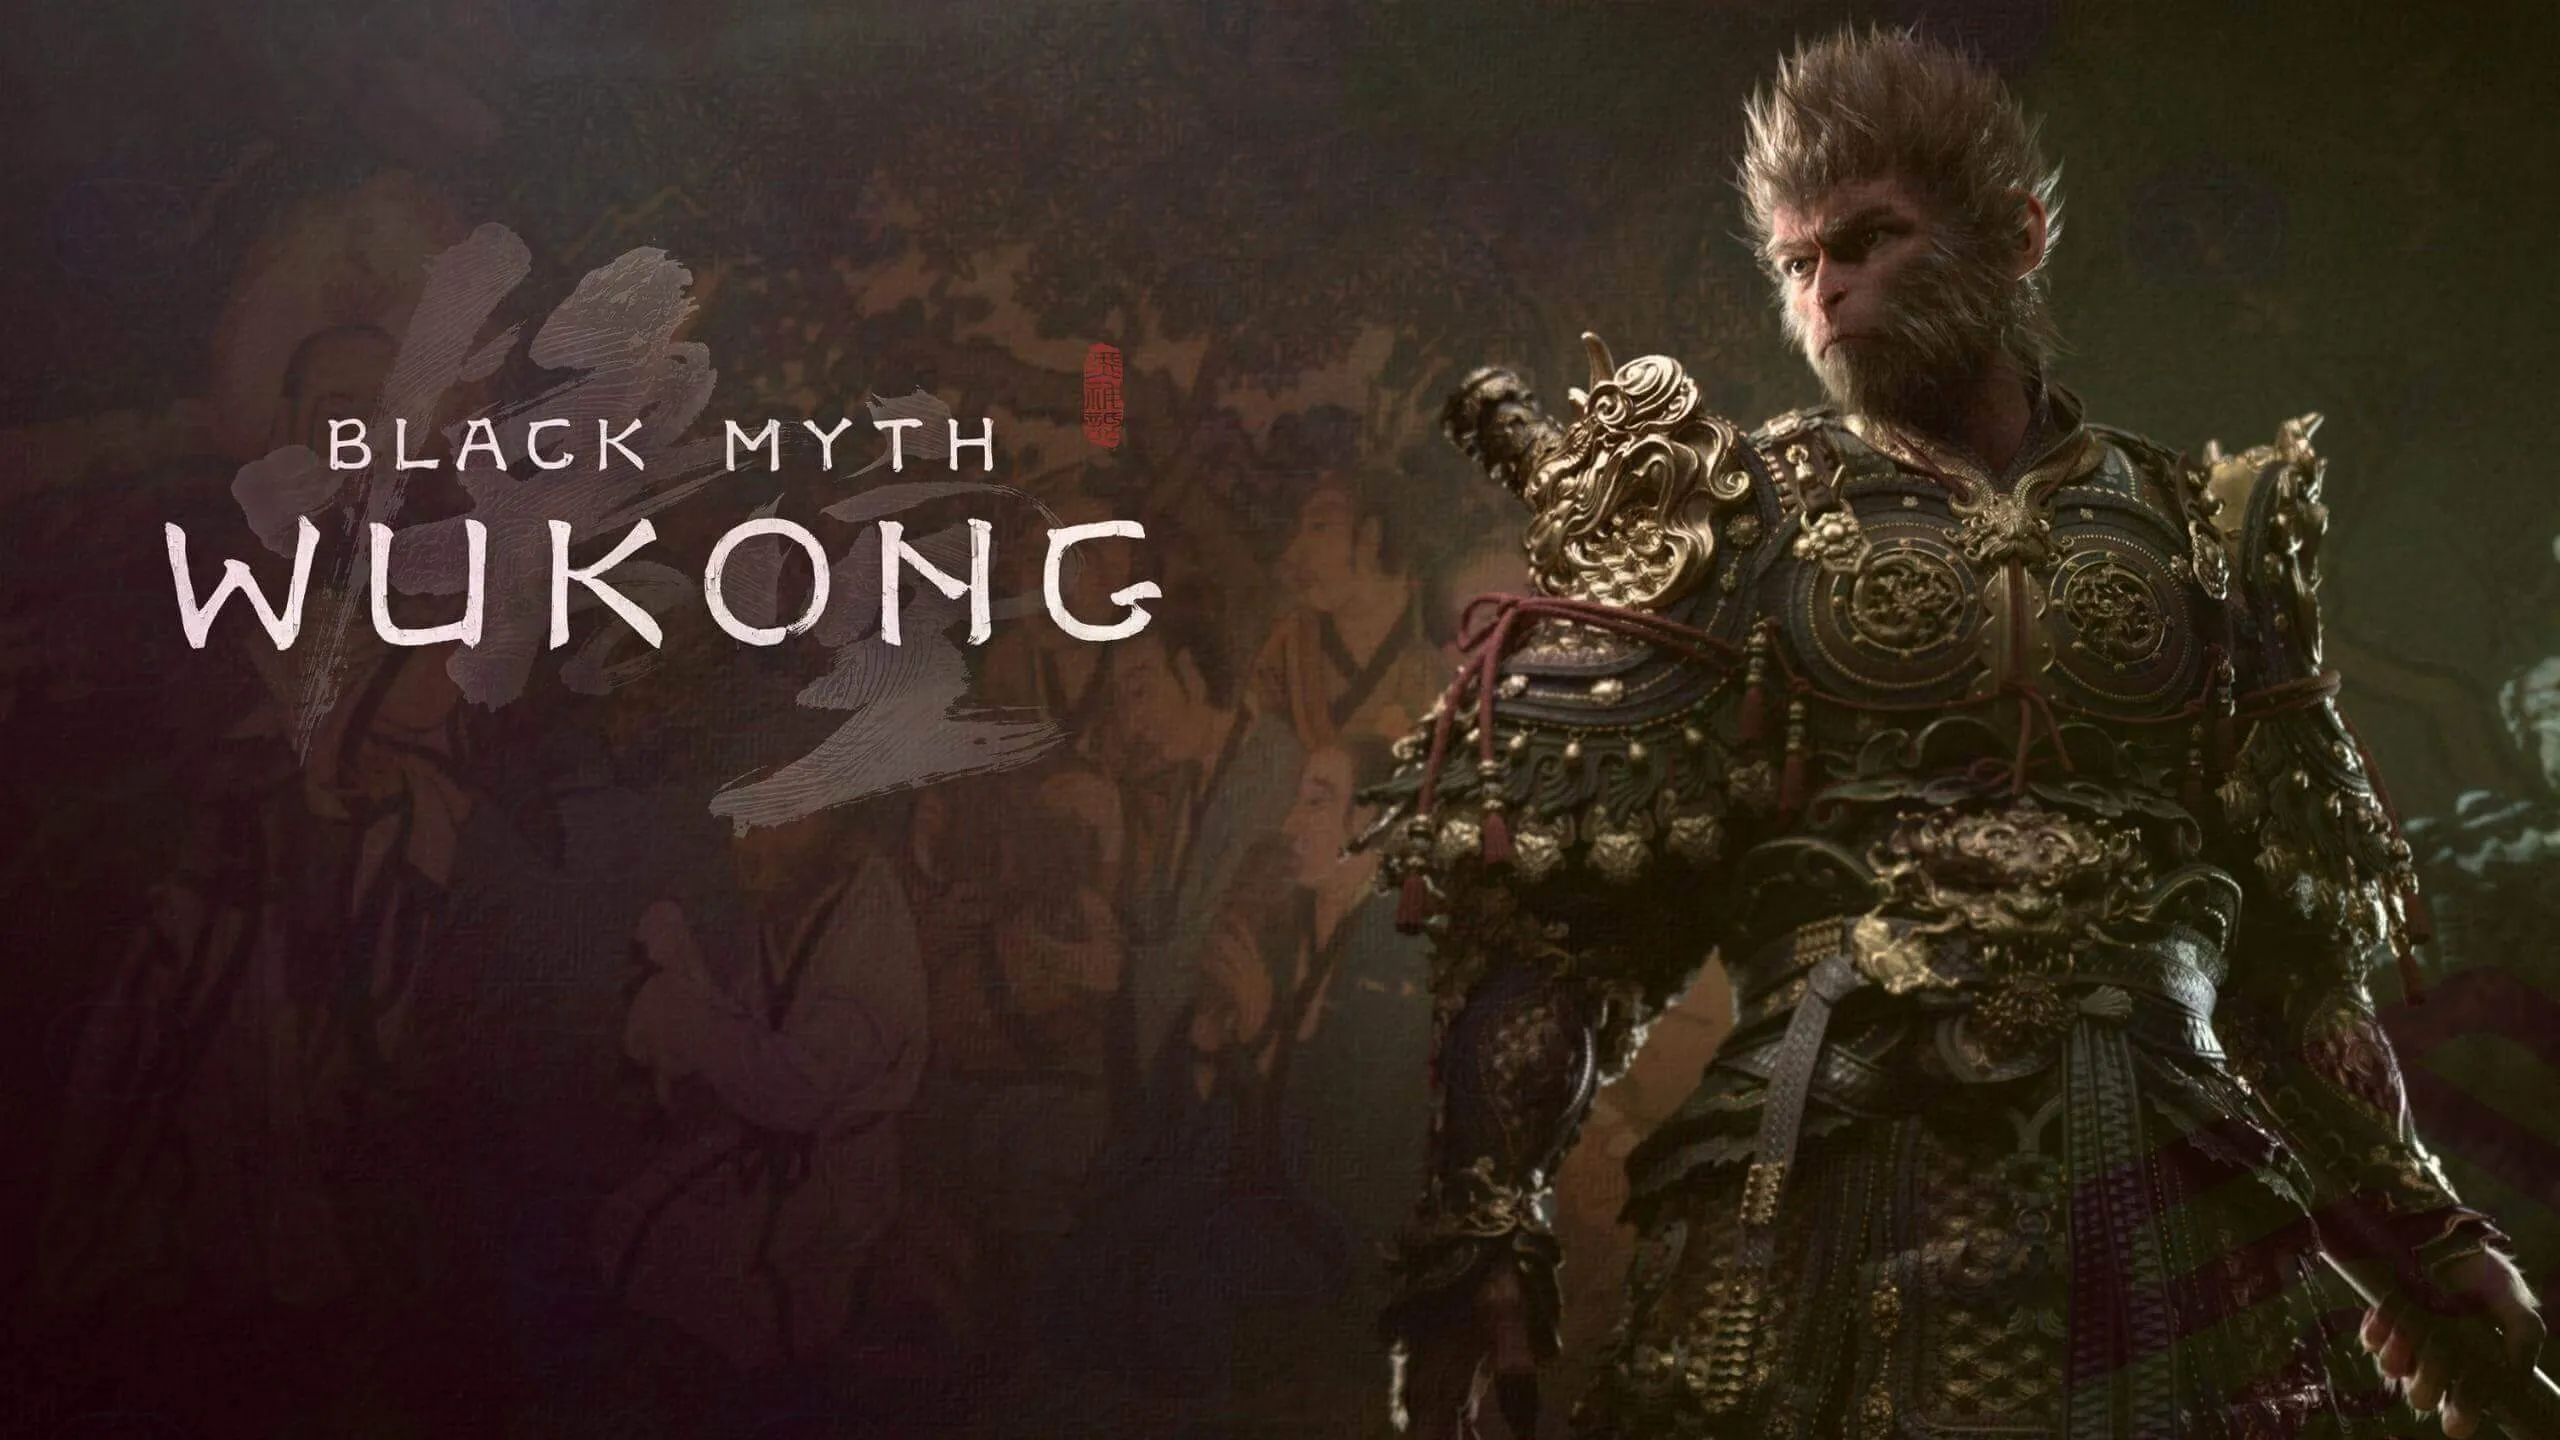 Black Myth: Wukong key art teaser image